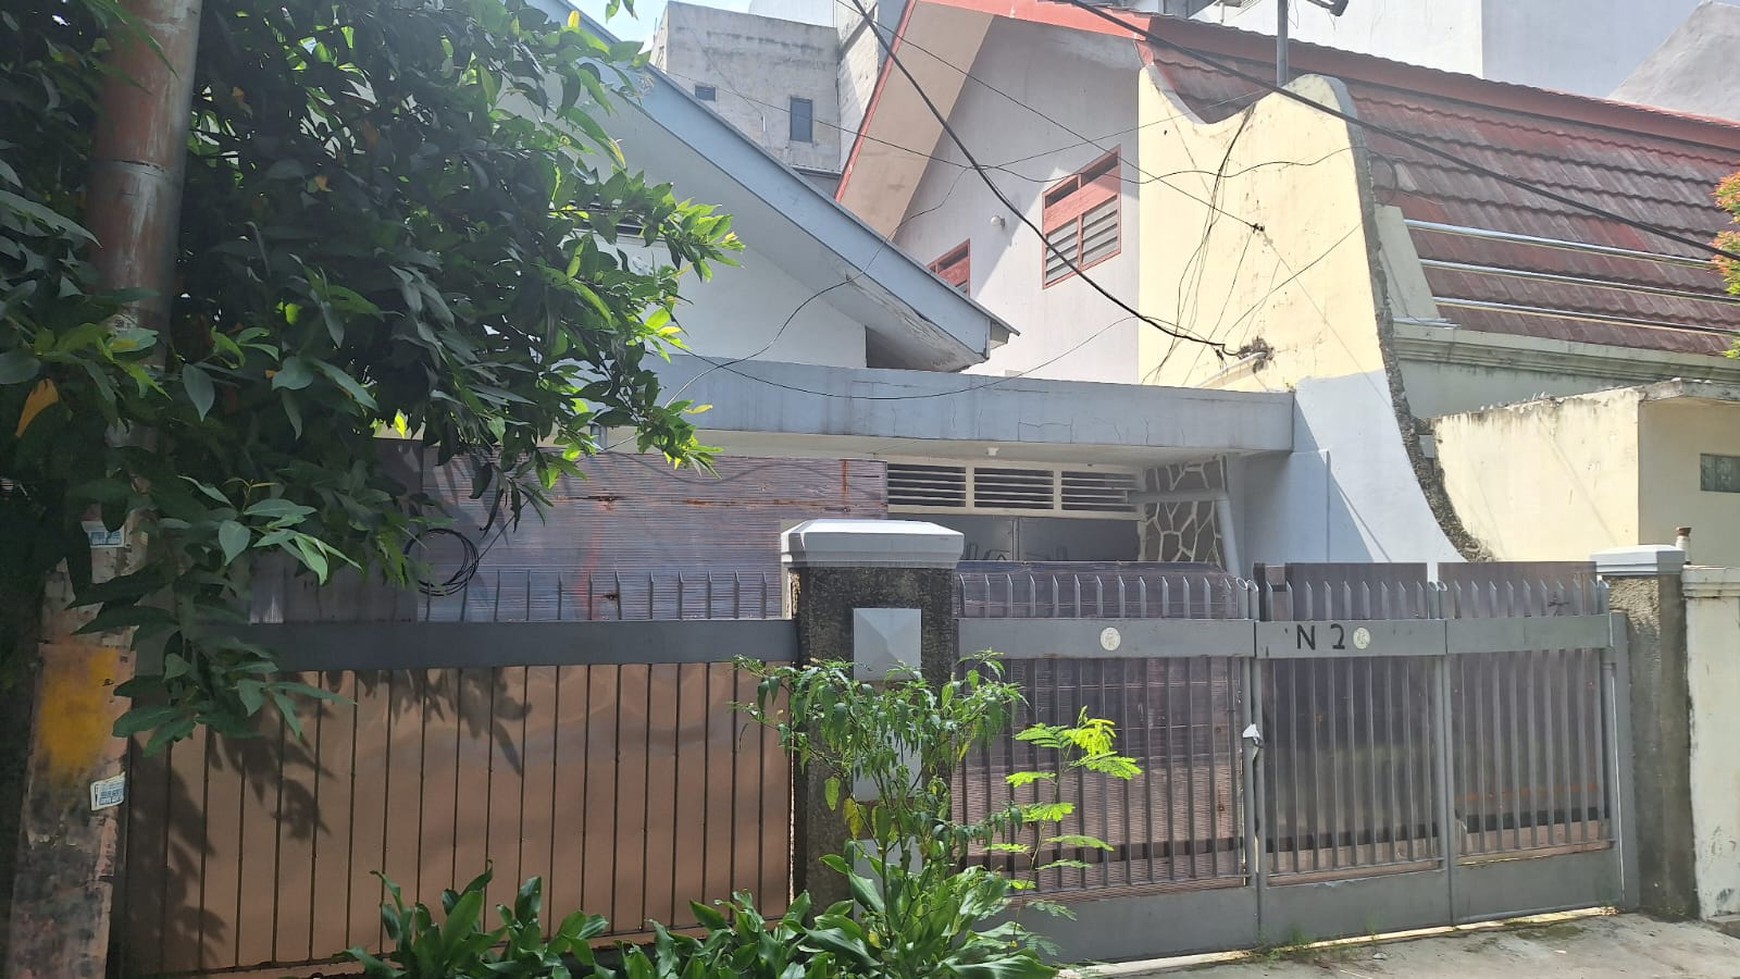 Rumah tua 1 lantai hitung tanah di Petojo Barat  Duri Pulo Jakarta Pusat